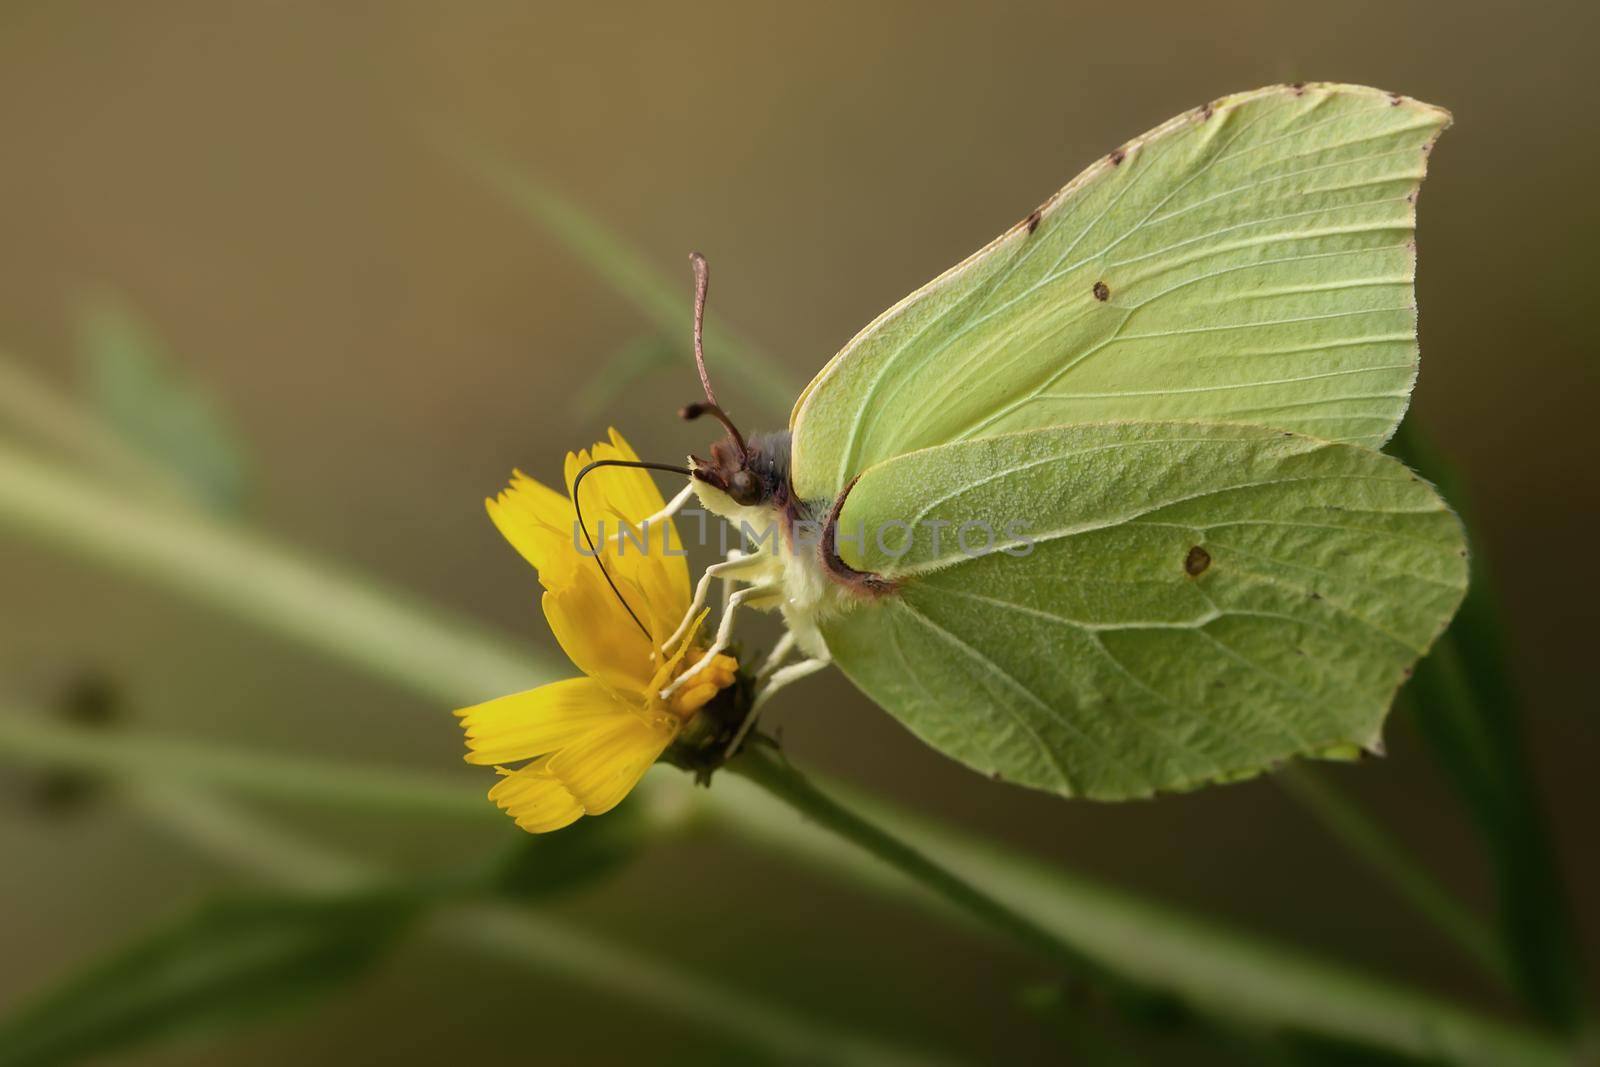 Brimstone buterfly by Lincikas